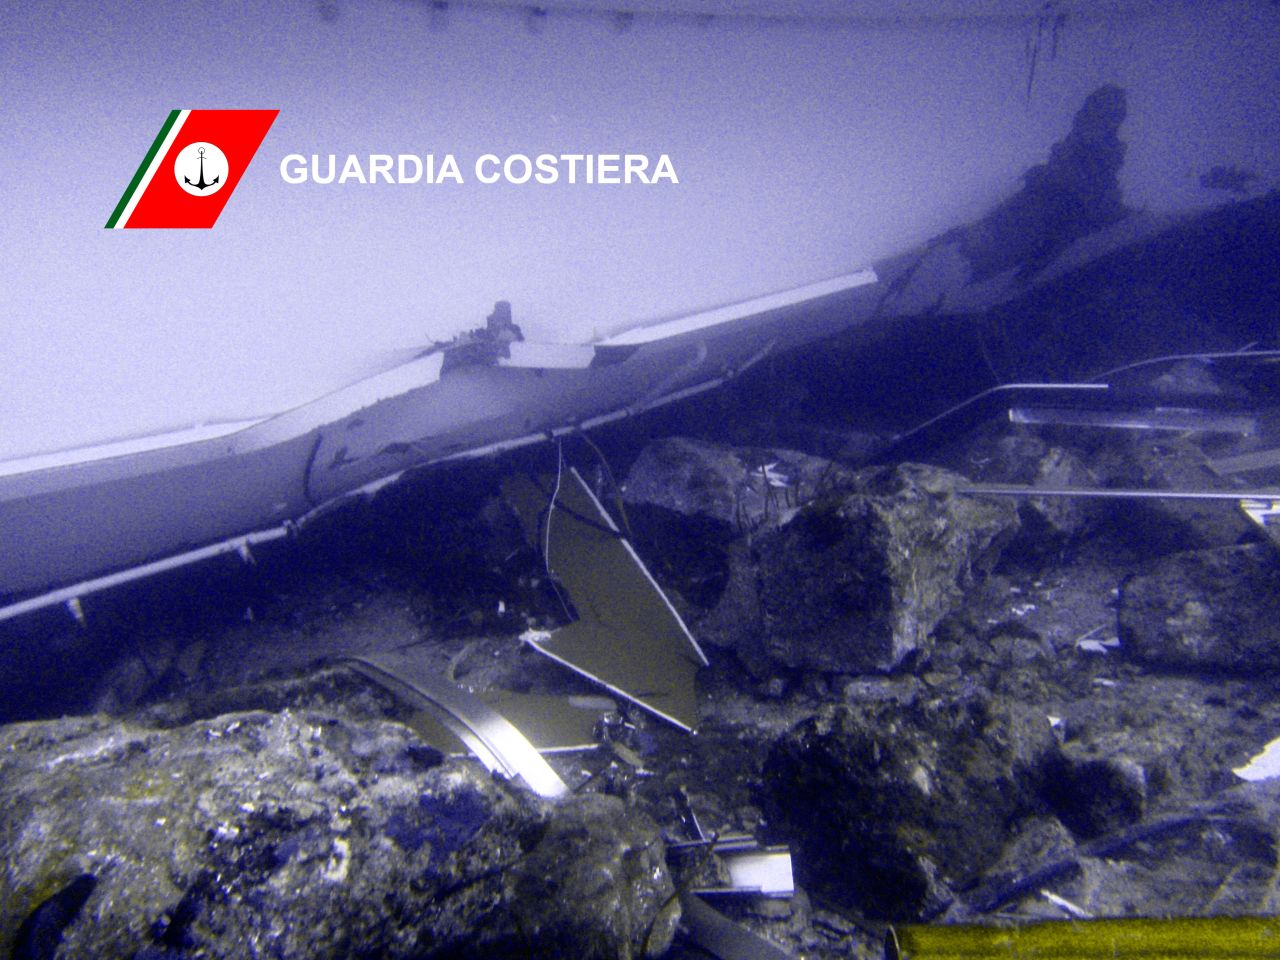 The Italian Coast Guard has released photos of the rescue effort at the cruise ship Costa Concordia near Giglio Island, Italy. 